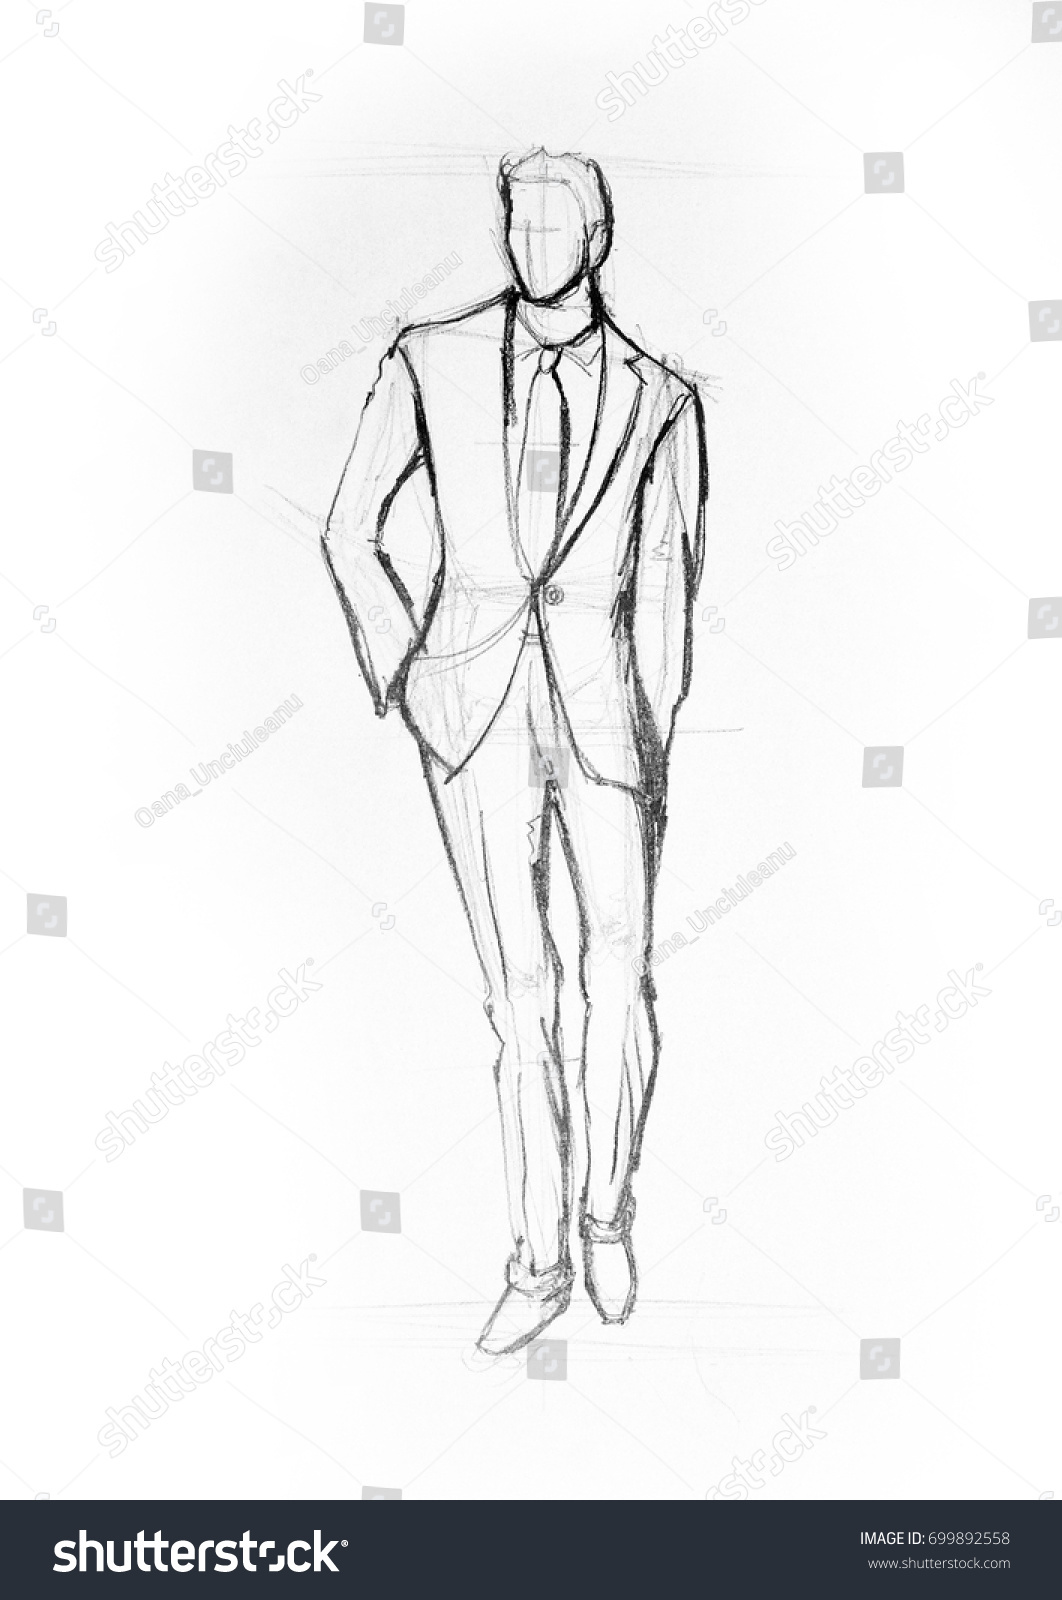 sketch of man in suit